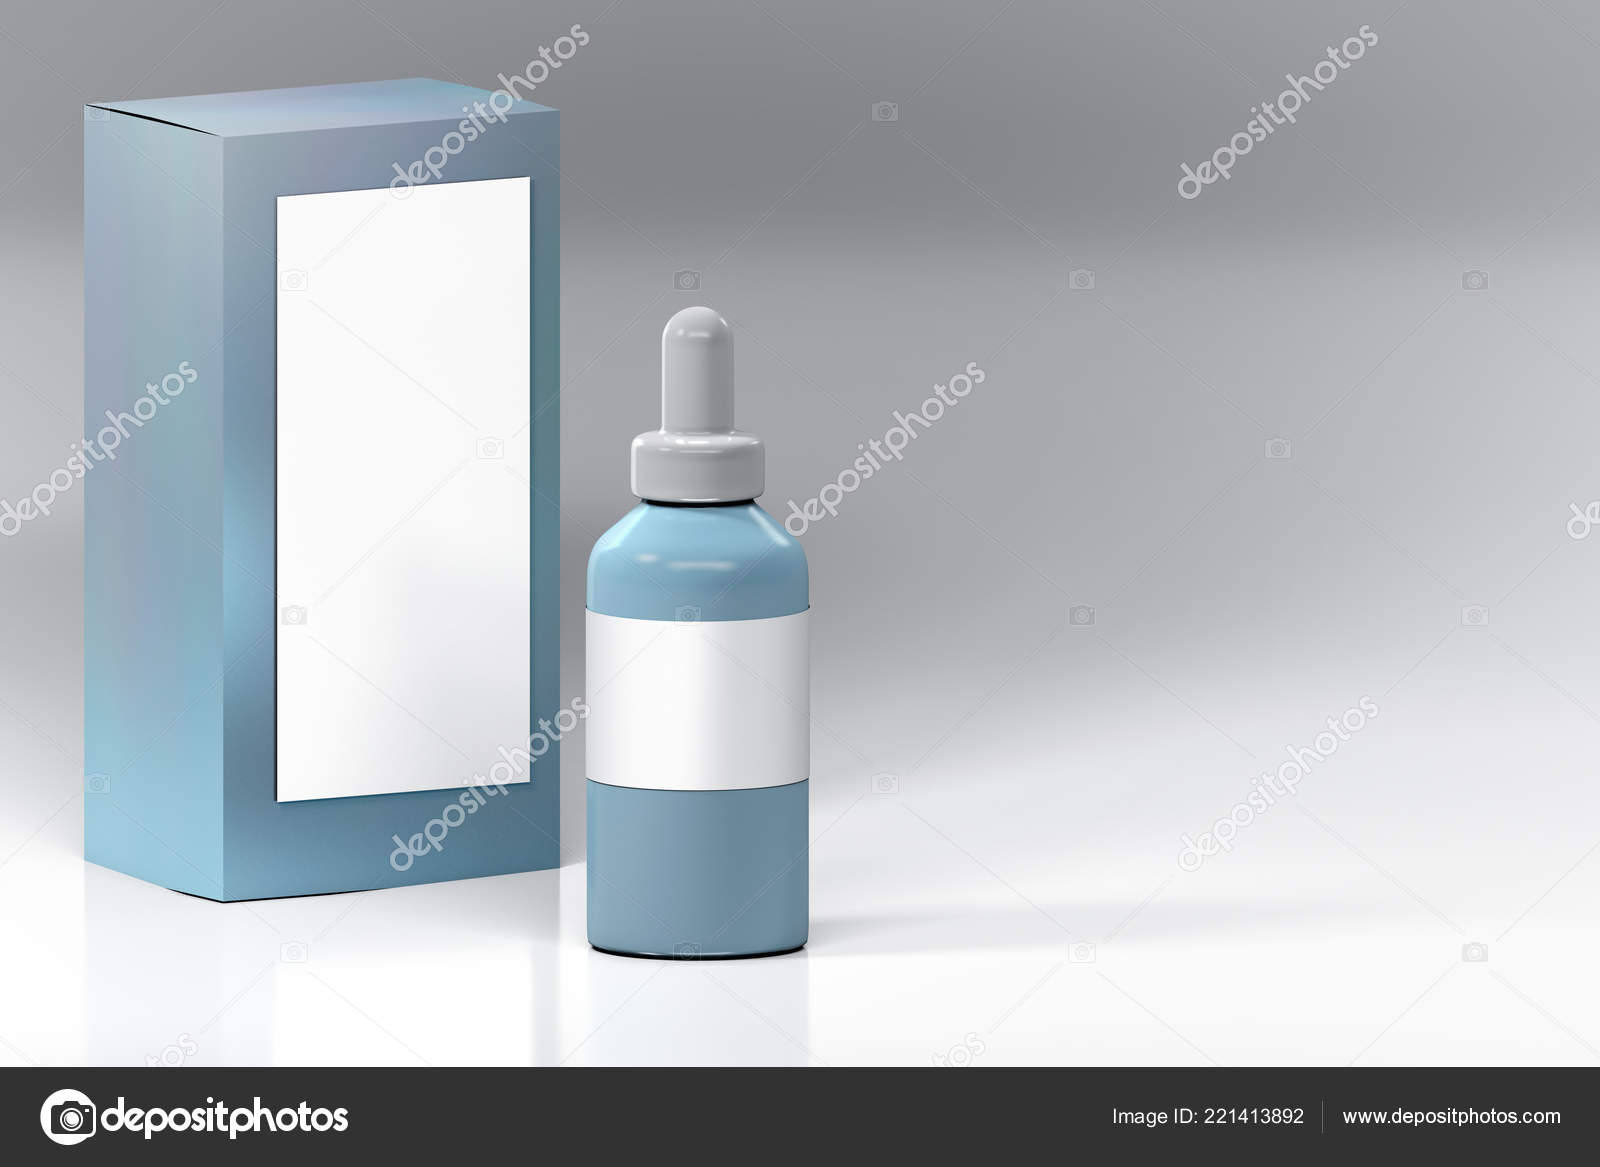 Download Mockup Blue Vape Bottle White Blank Label Package Box Plastic Stock Photo Image By C Dariaren 221413892